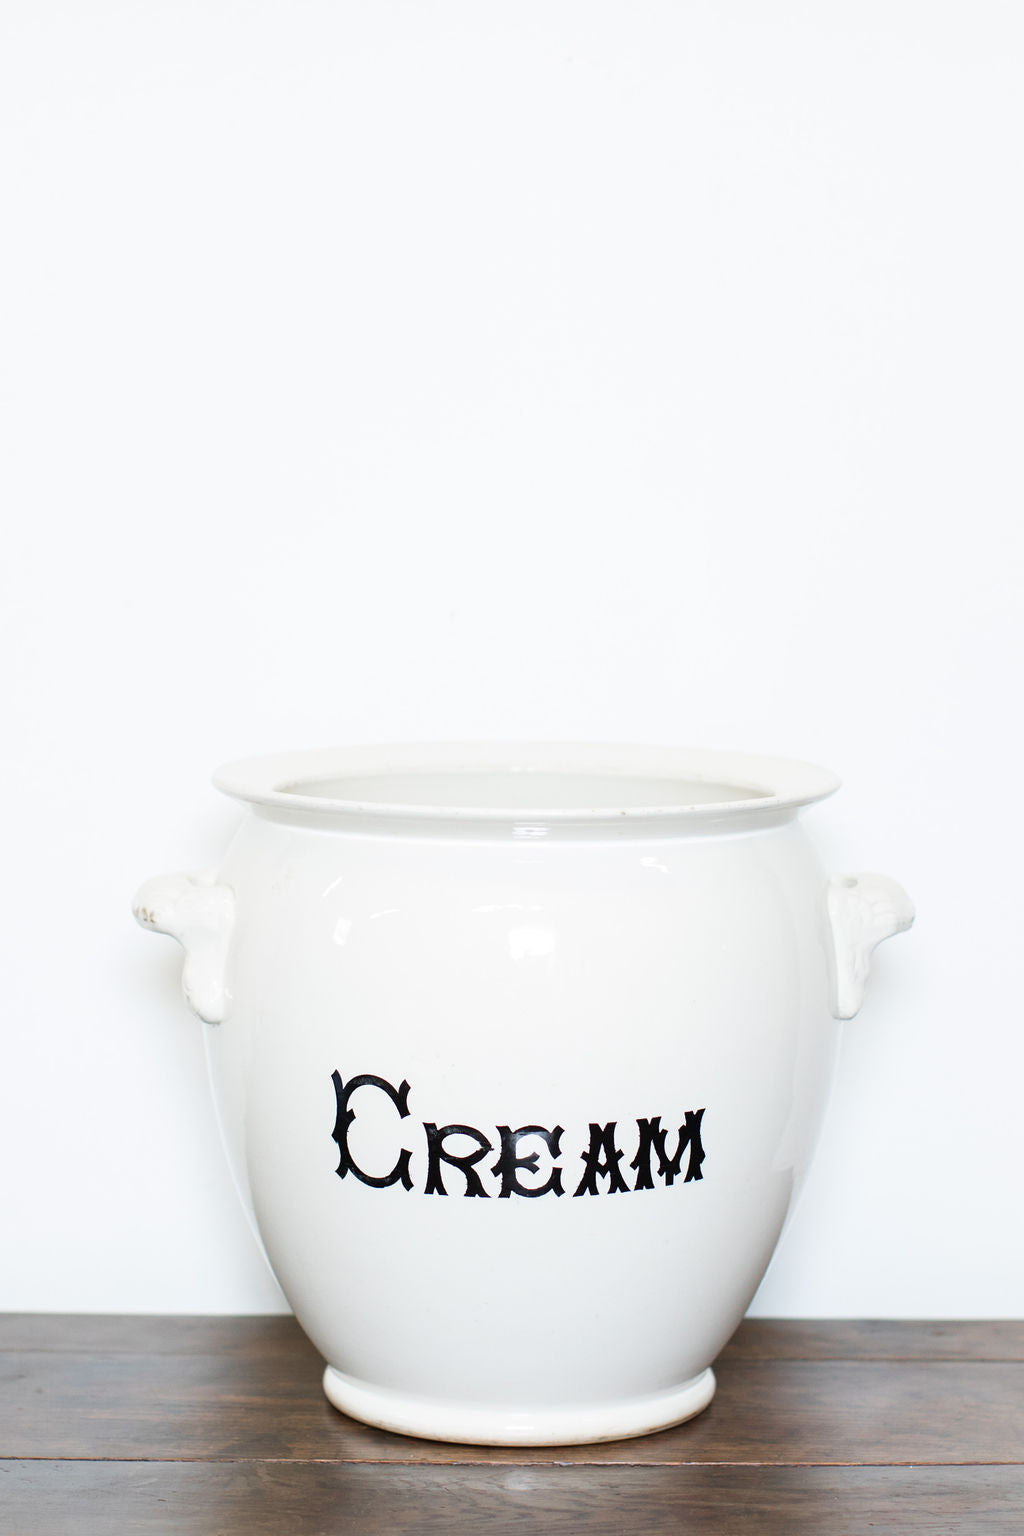 Antique Cream Pail - Dairy Supply Co.